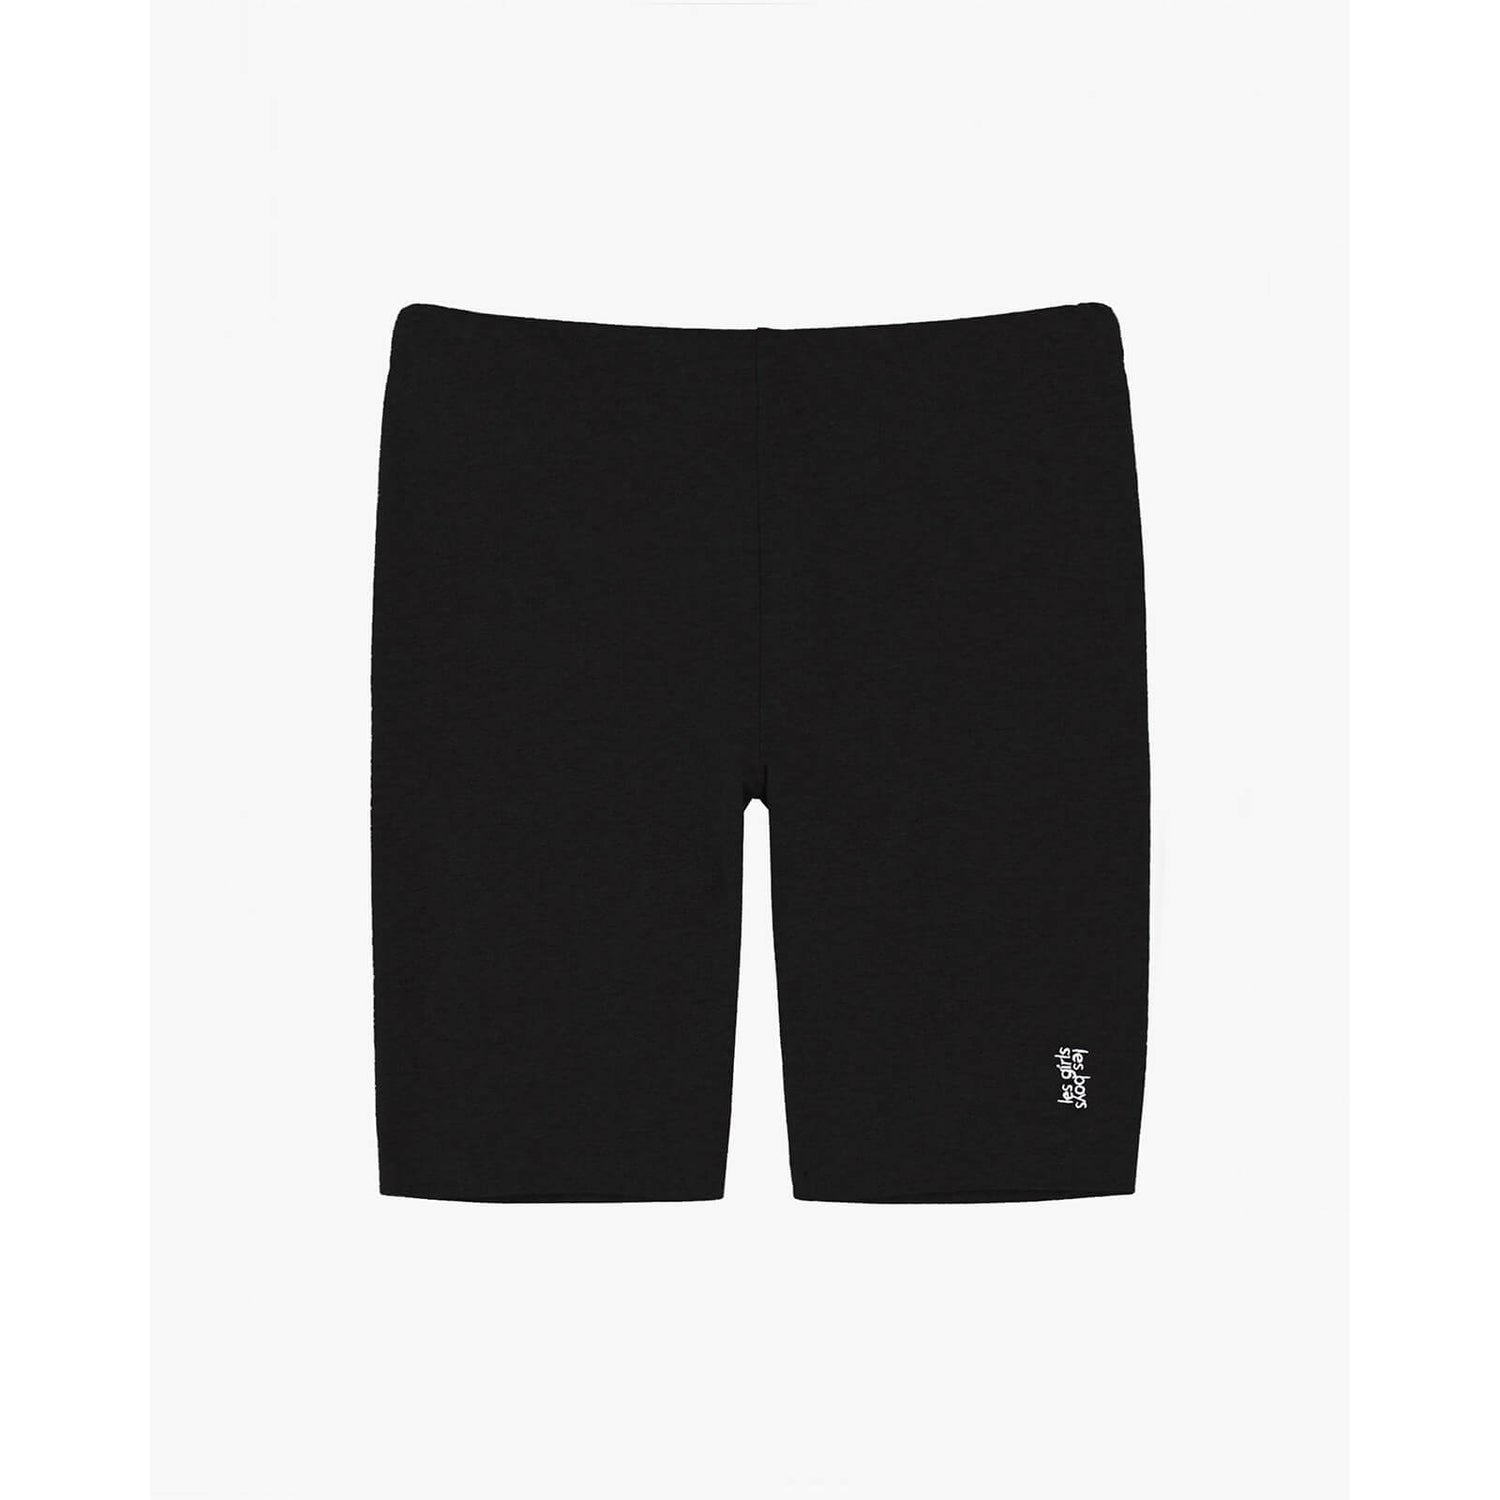 Les Girls Les Boys Women's Jersey Apparel Tight Shorts - Black